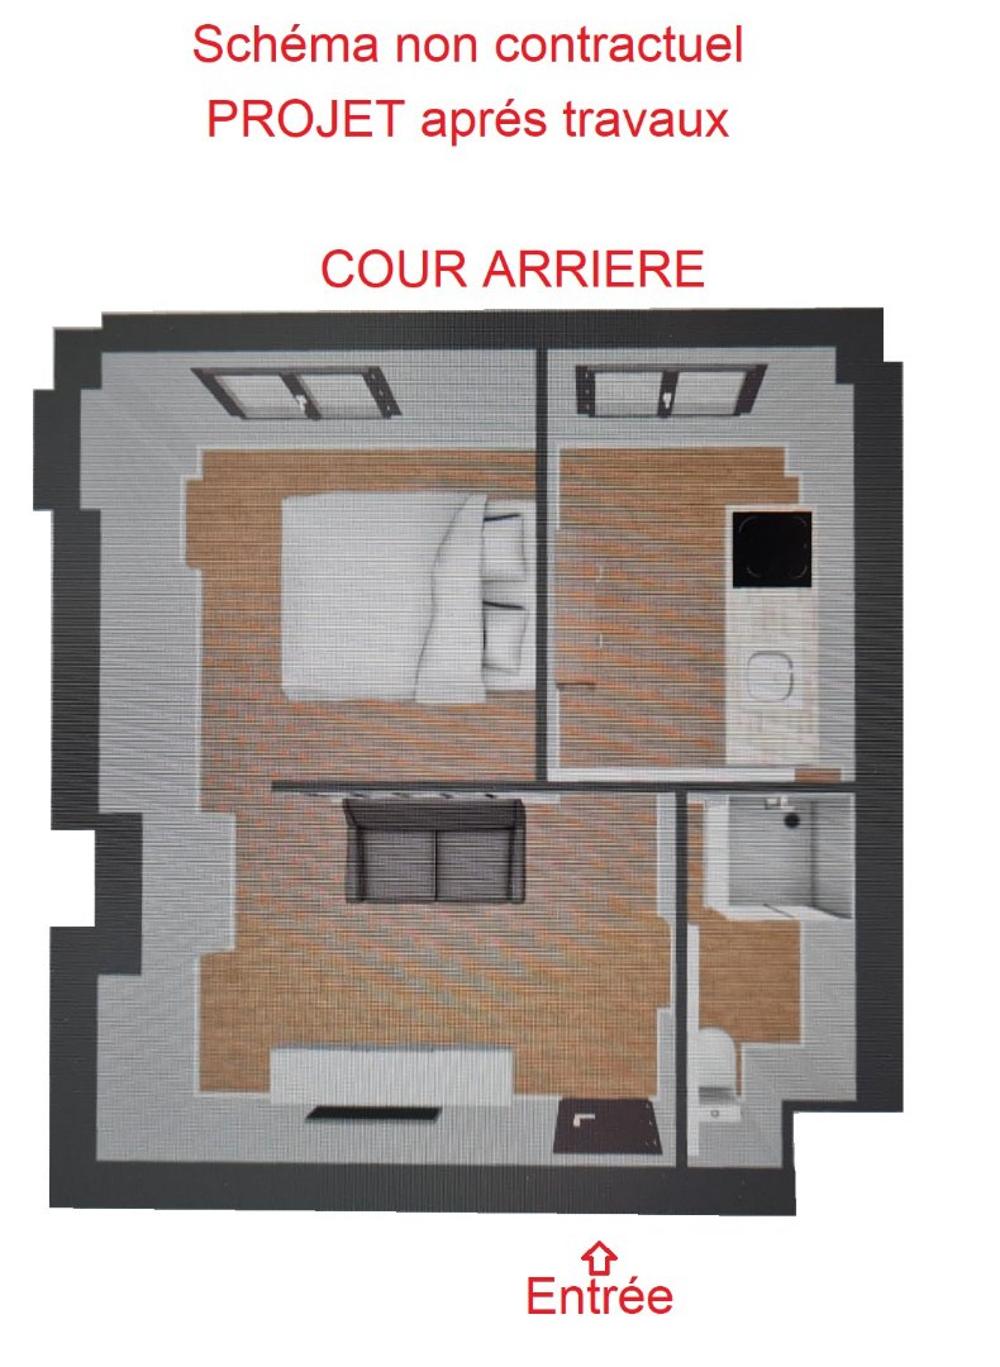  te koop appartement Paris 10e Arrondissement Parijs (Seine) 1